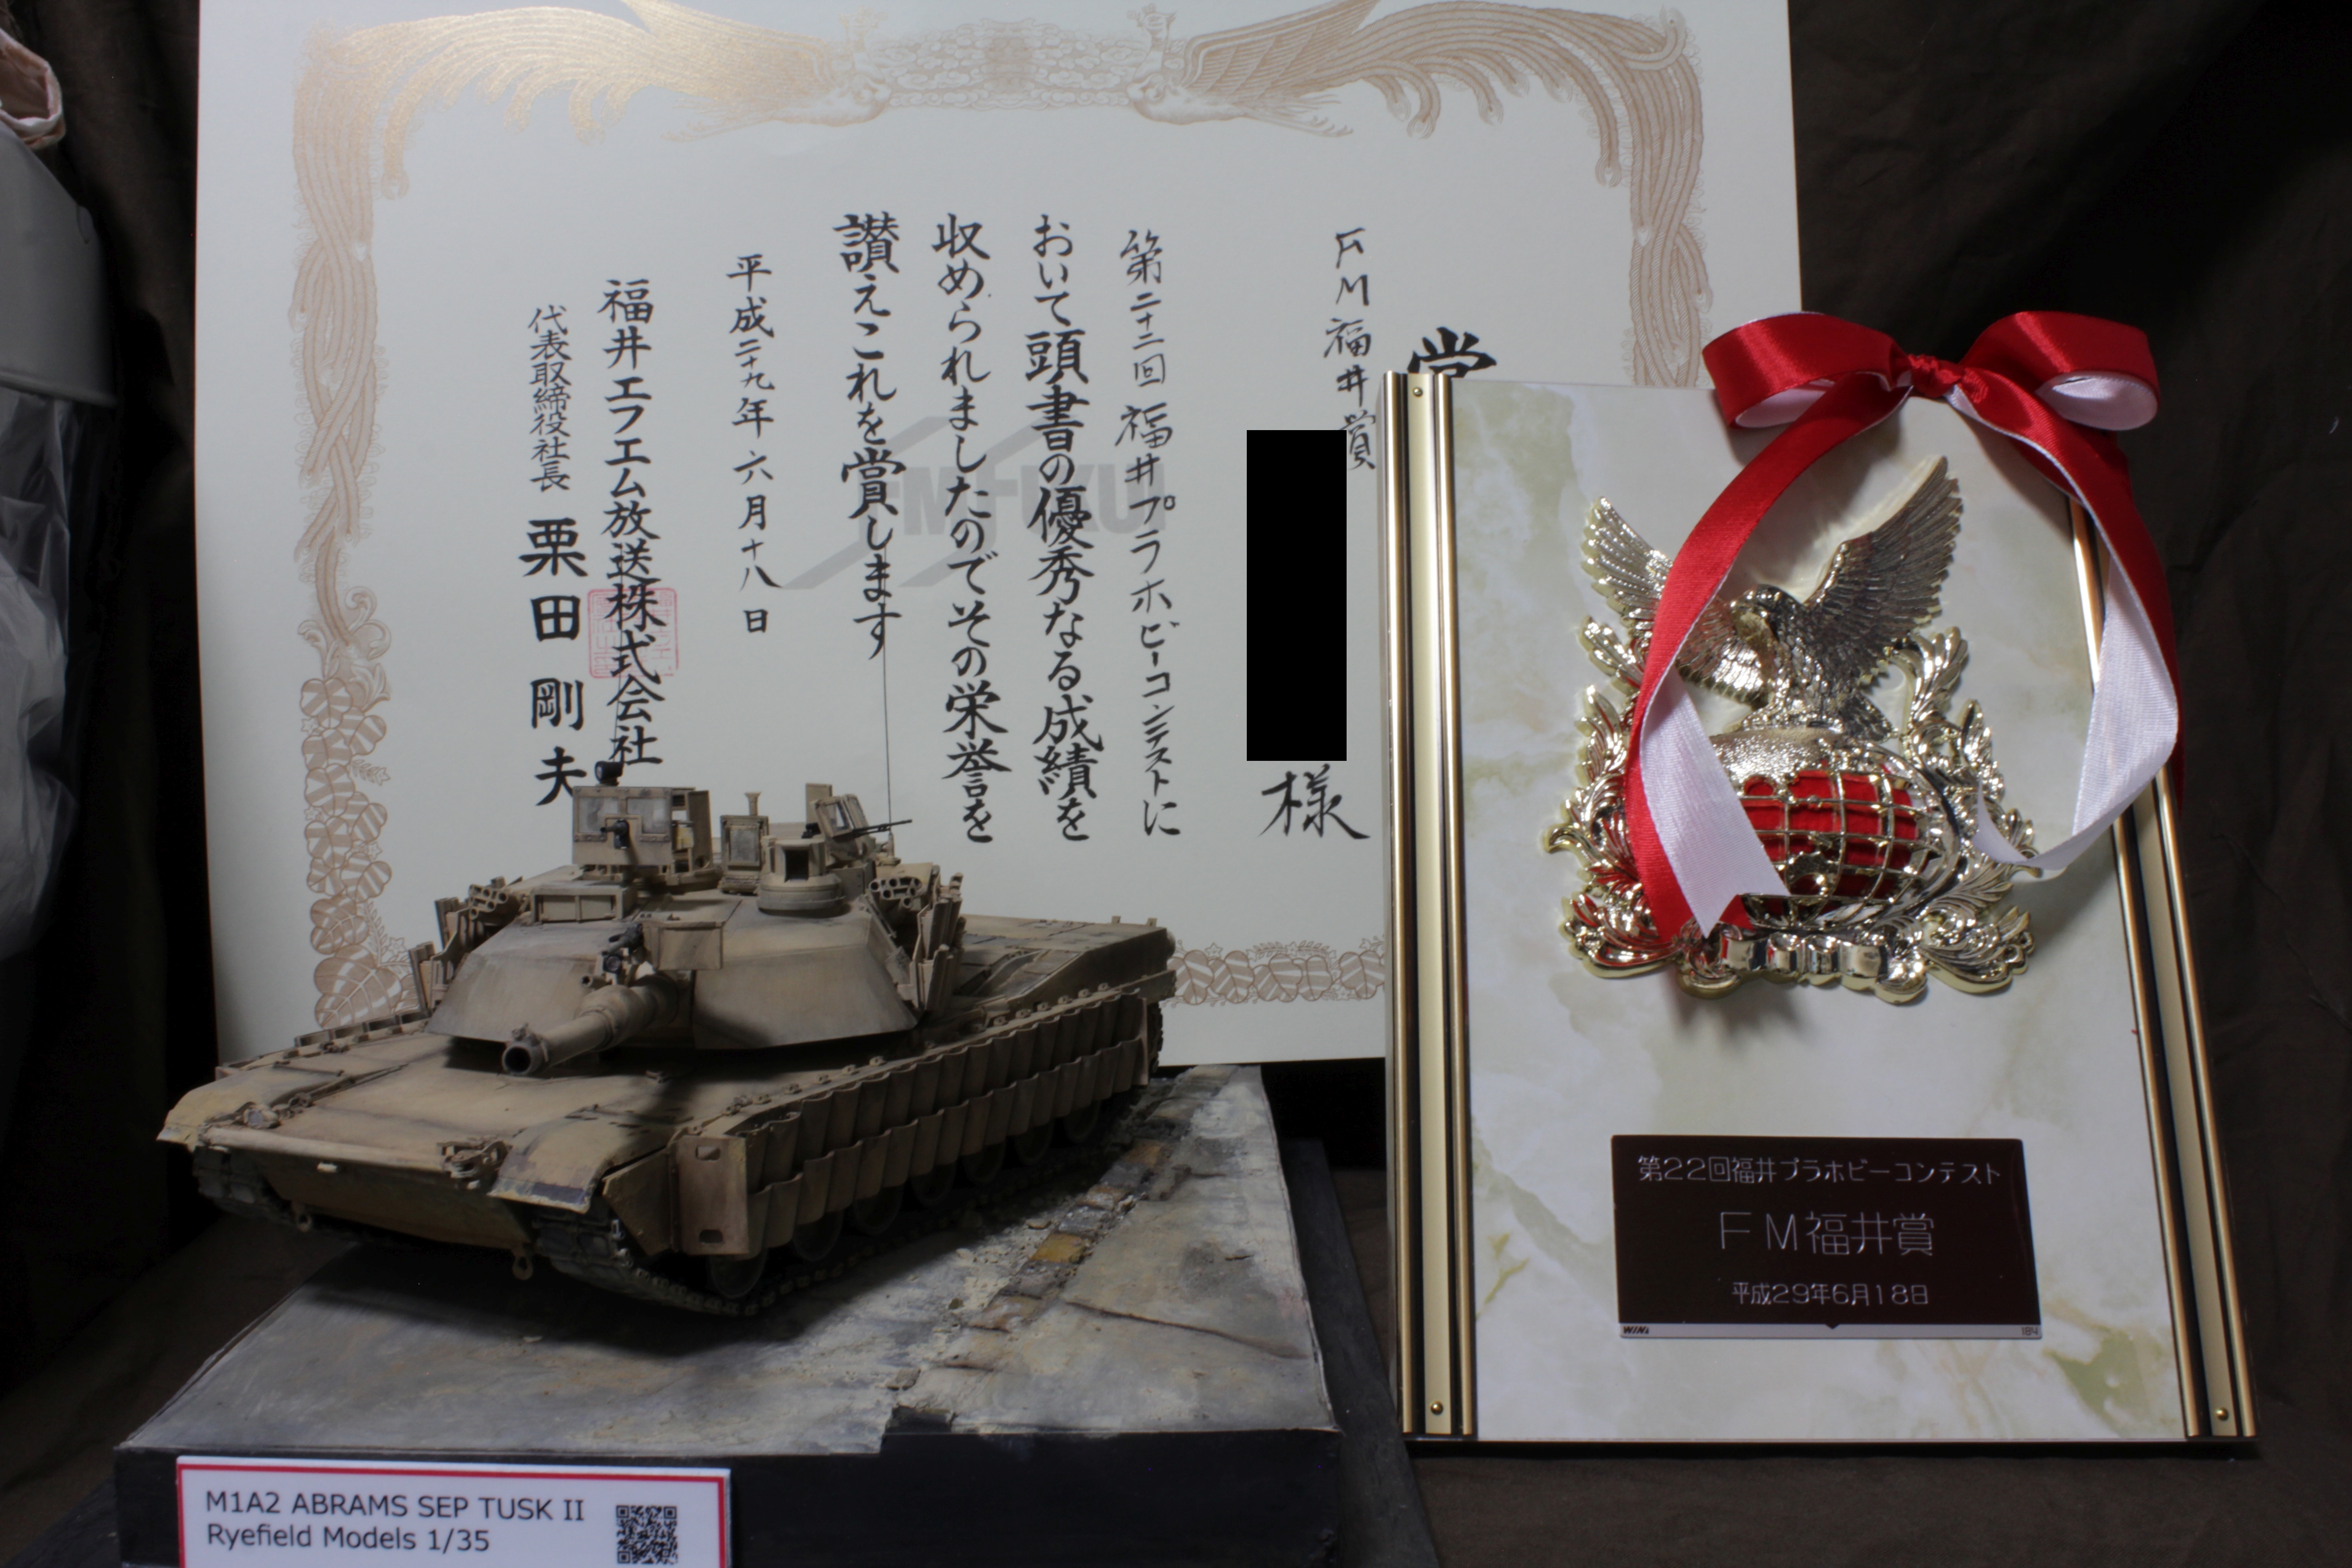 Main Battle Tank M1a2 Abrams Tusk Yorunomachi The World